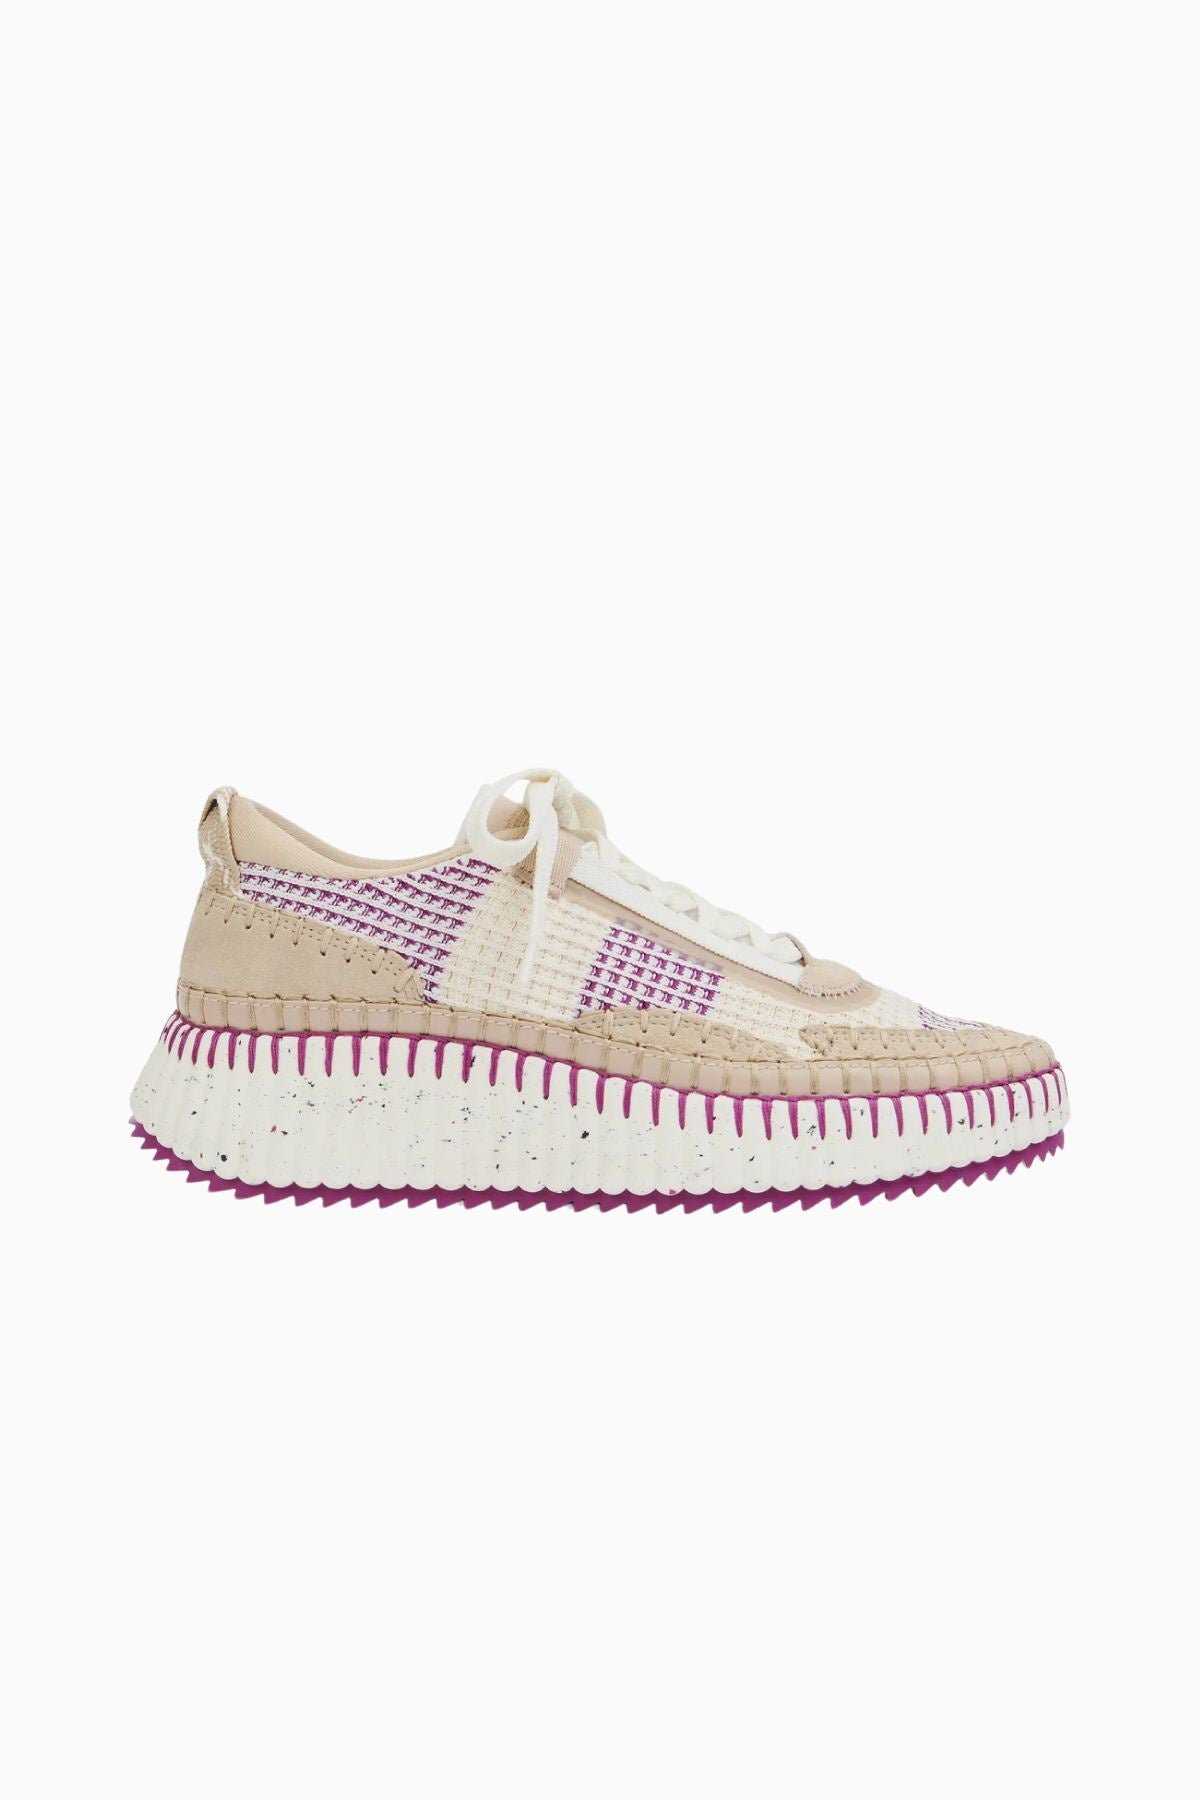 Chloé Nama Sneaker - Wild Purple